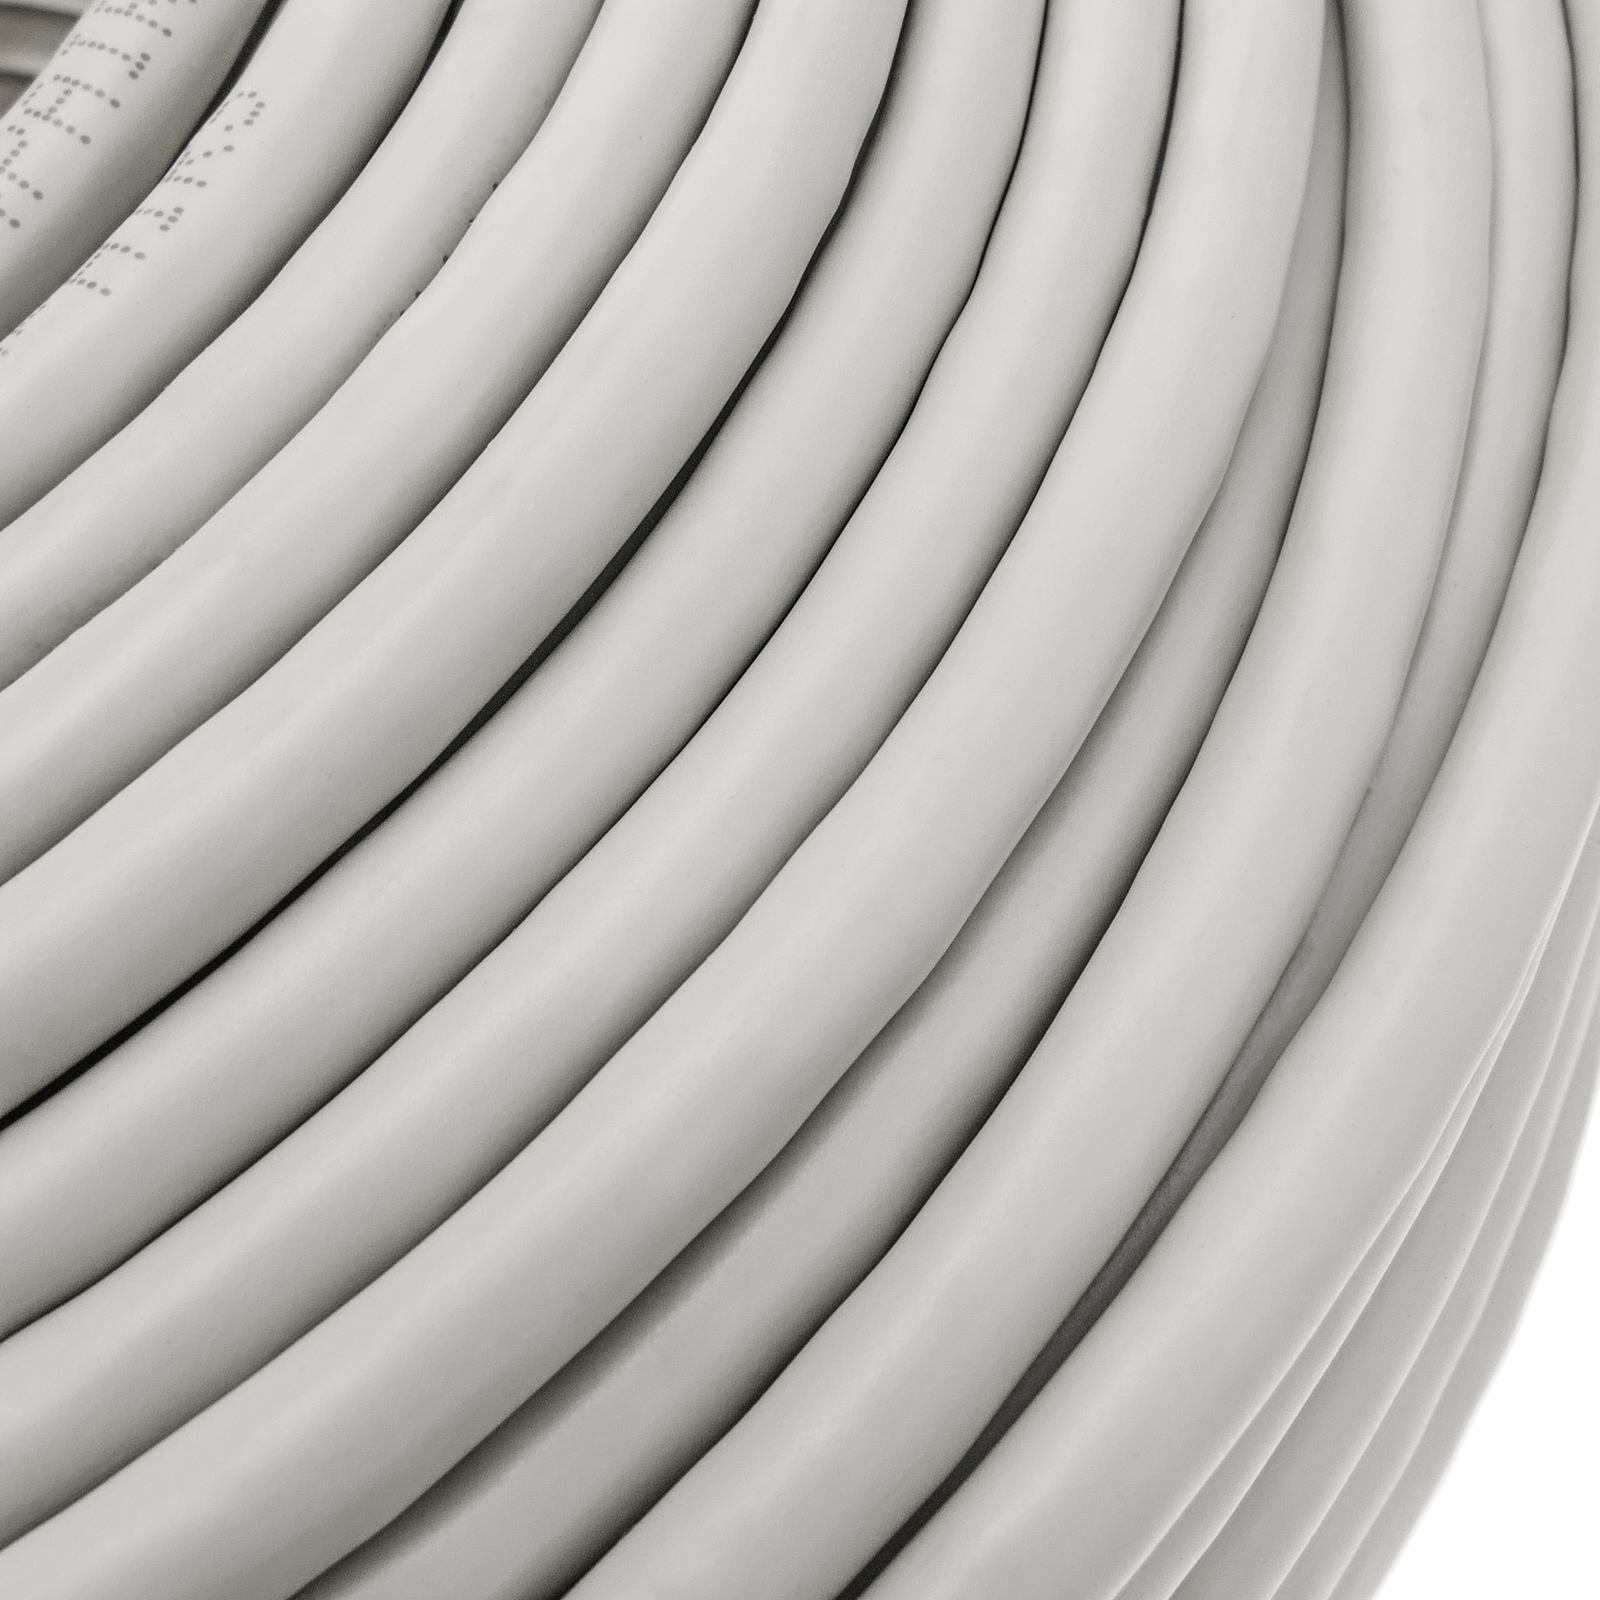 Bematik - Bobine de câble Ethernet LSHF UTP Cat.6 24AWG flexible 100m -  Câble RJ45 - Rue du Commerce